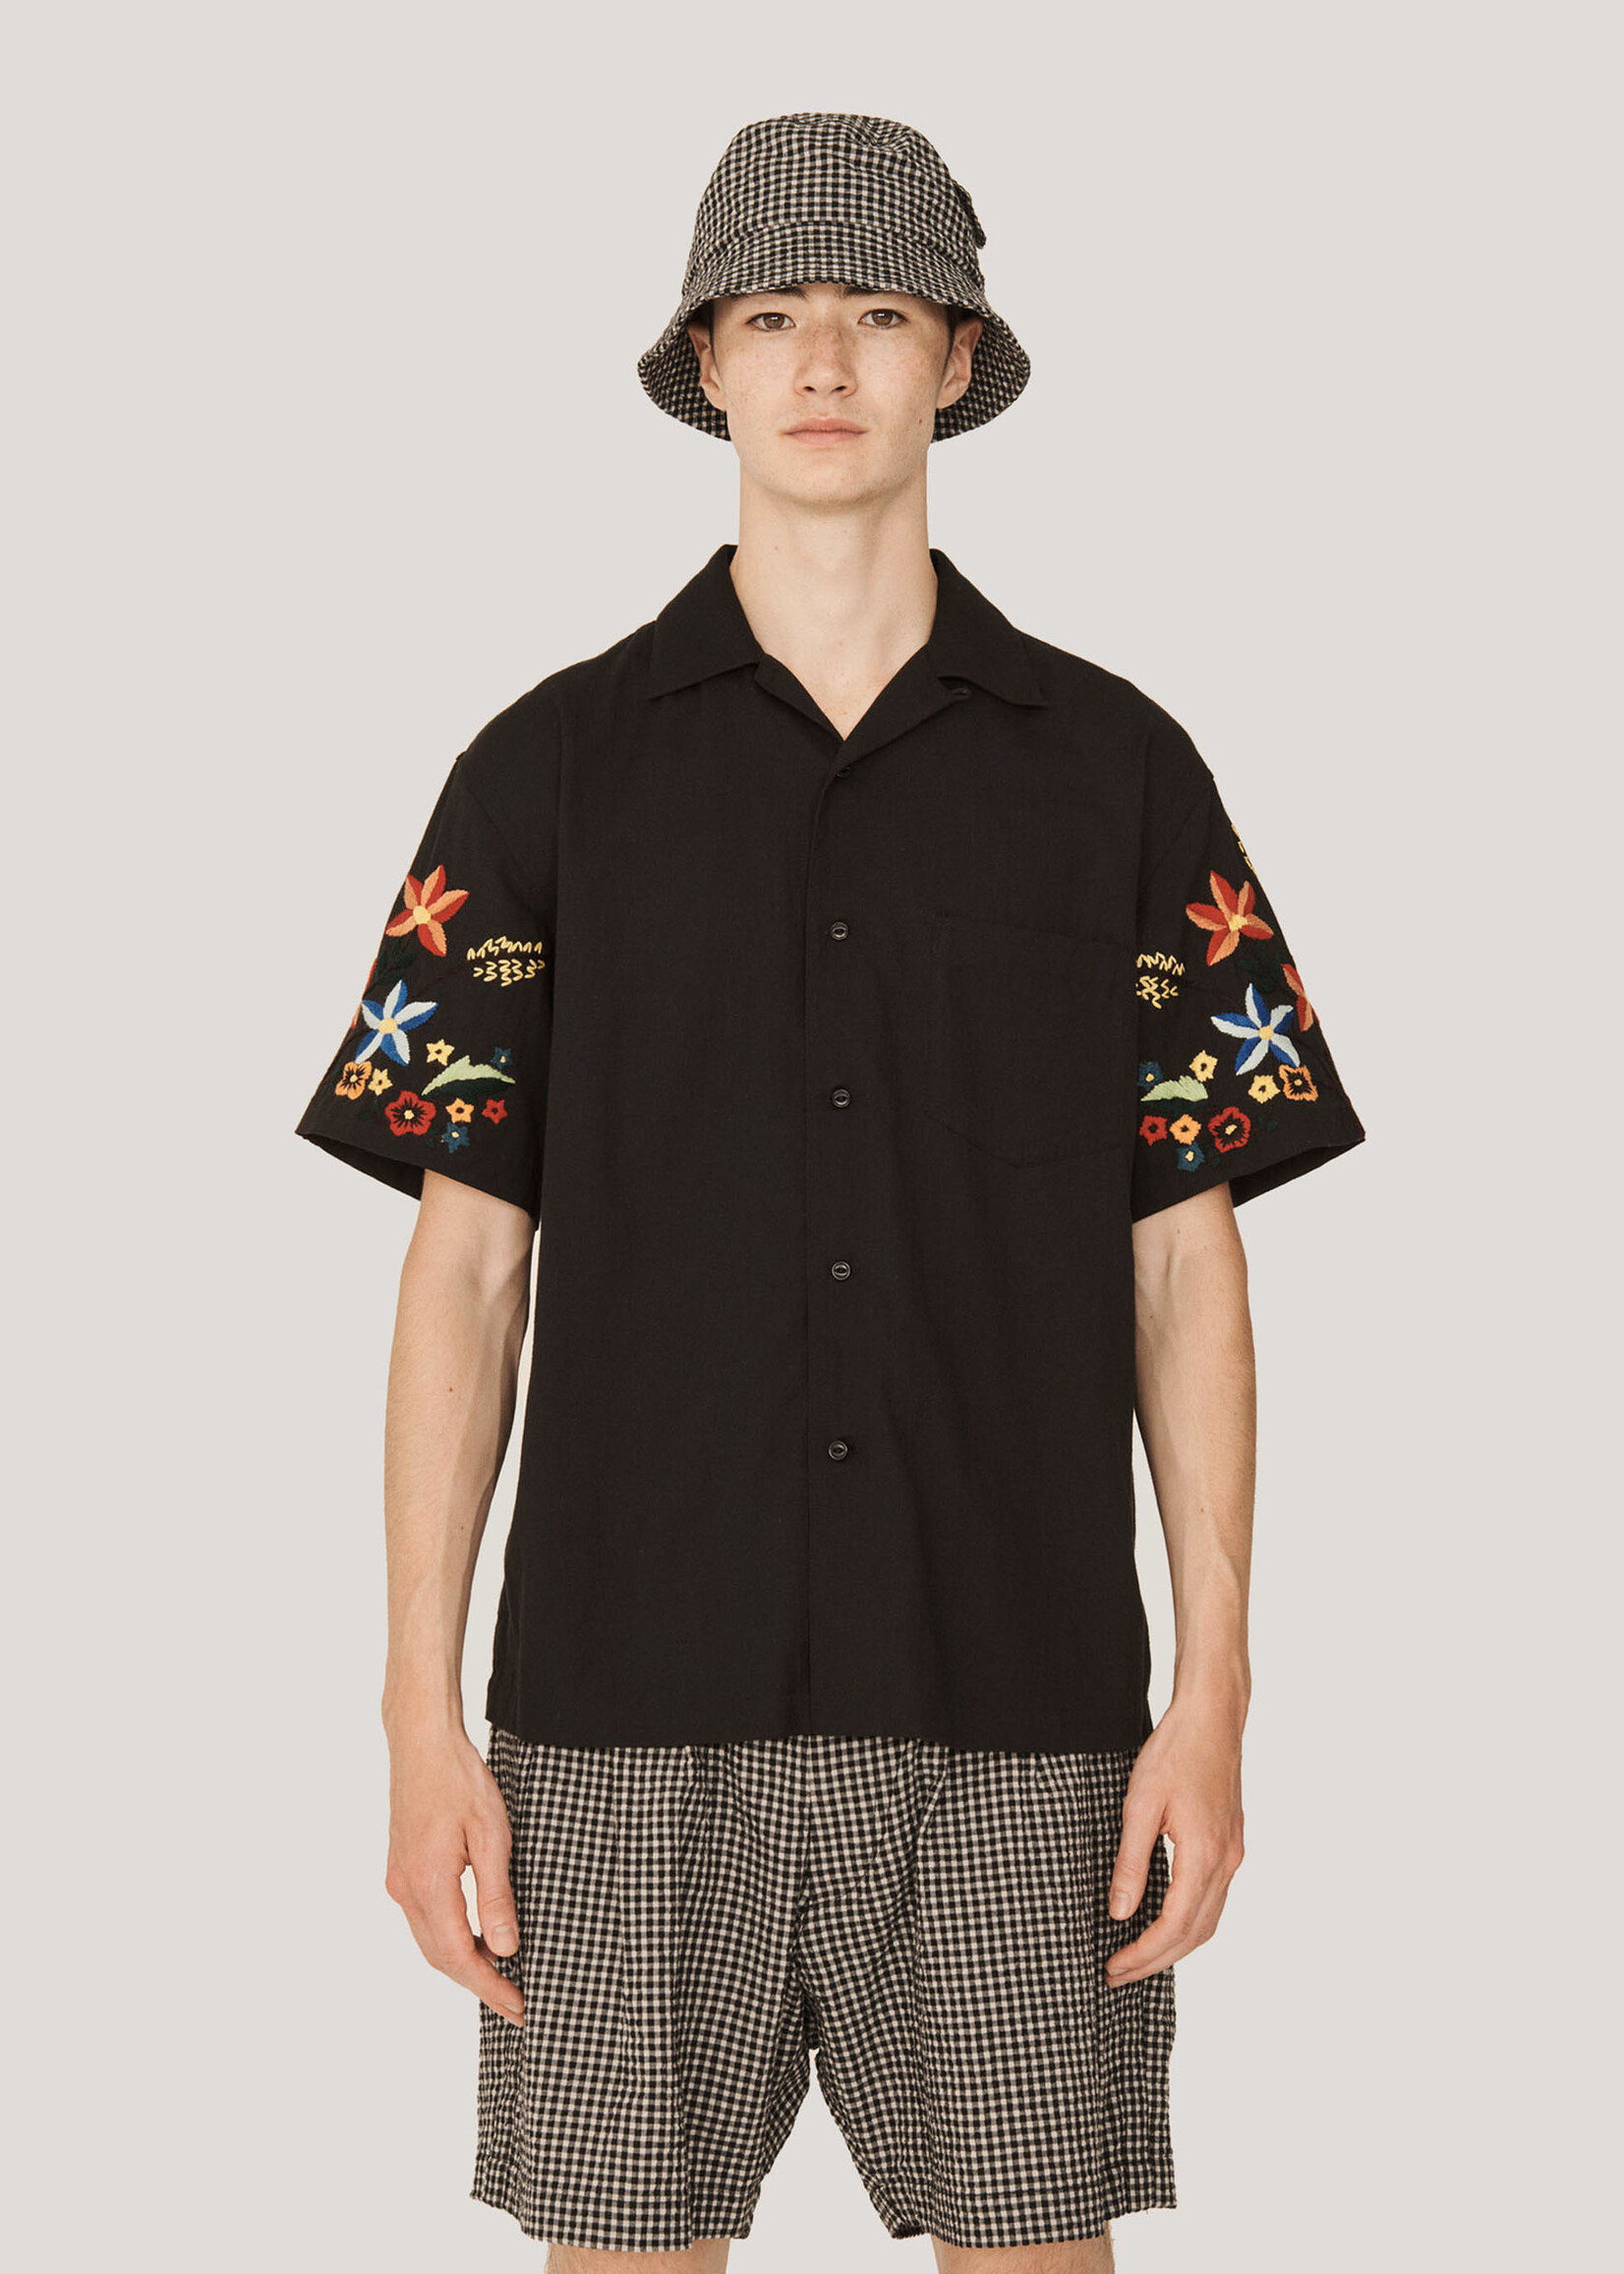 YMC Idris Embroidered Shirt in Black